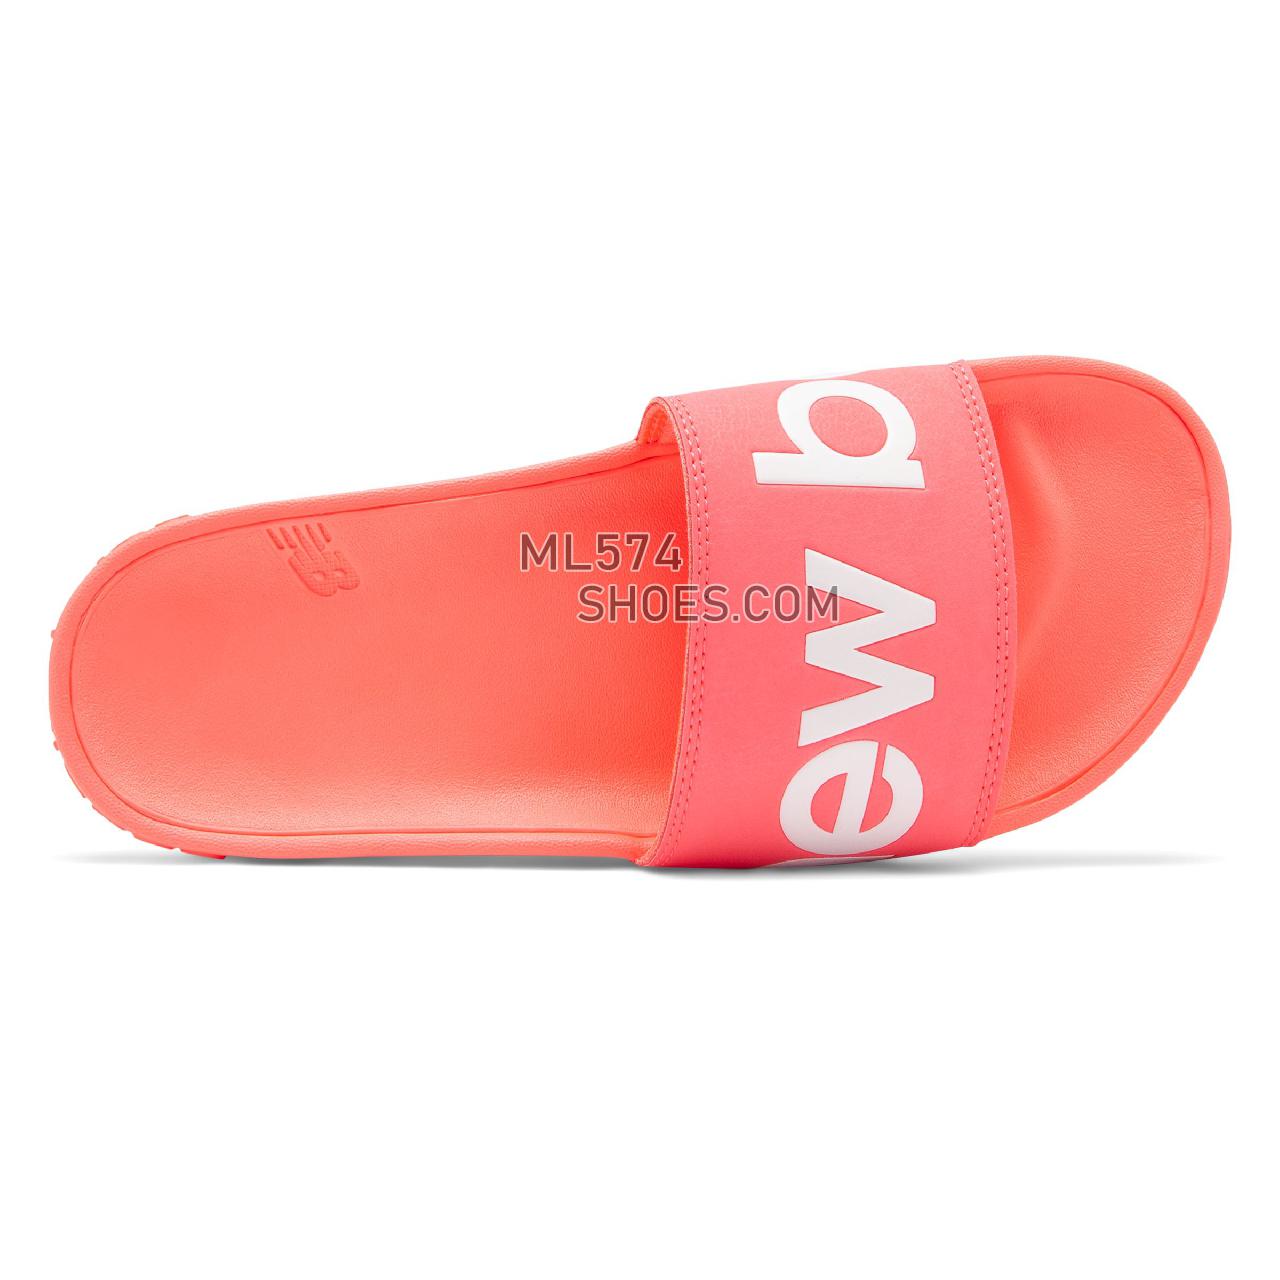 New Balance 200 - Women's Sandals - Guava - SWF200G1